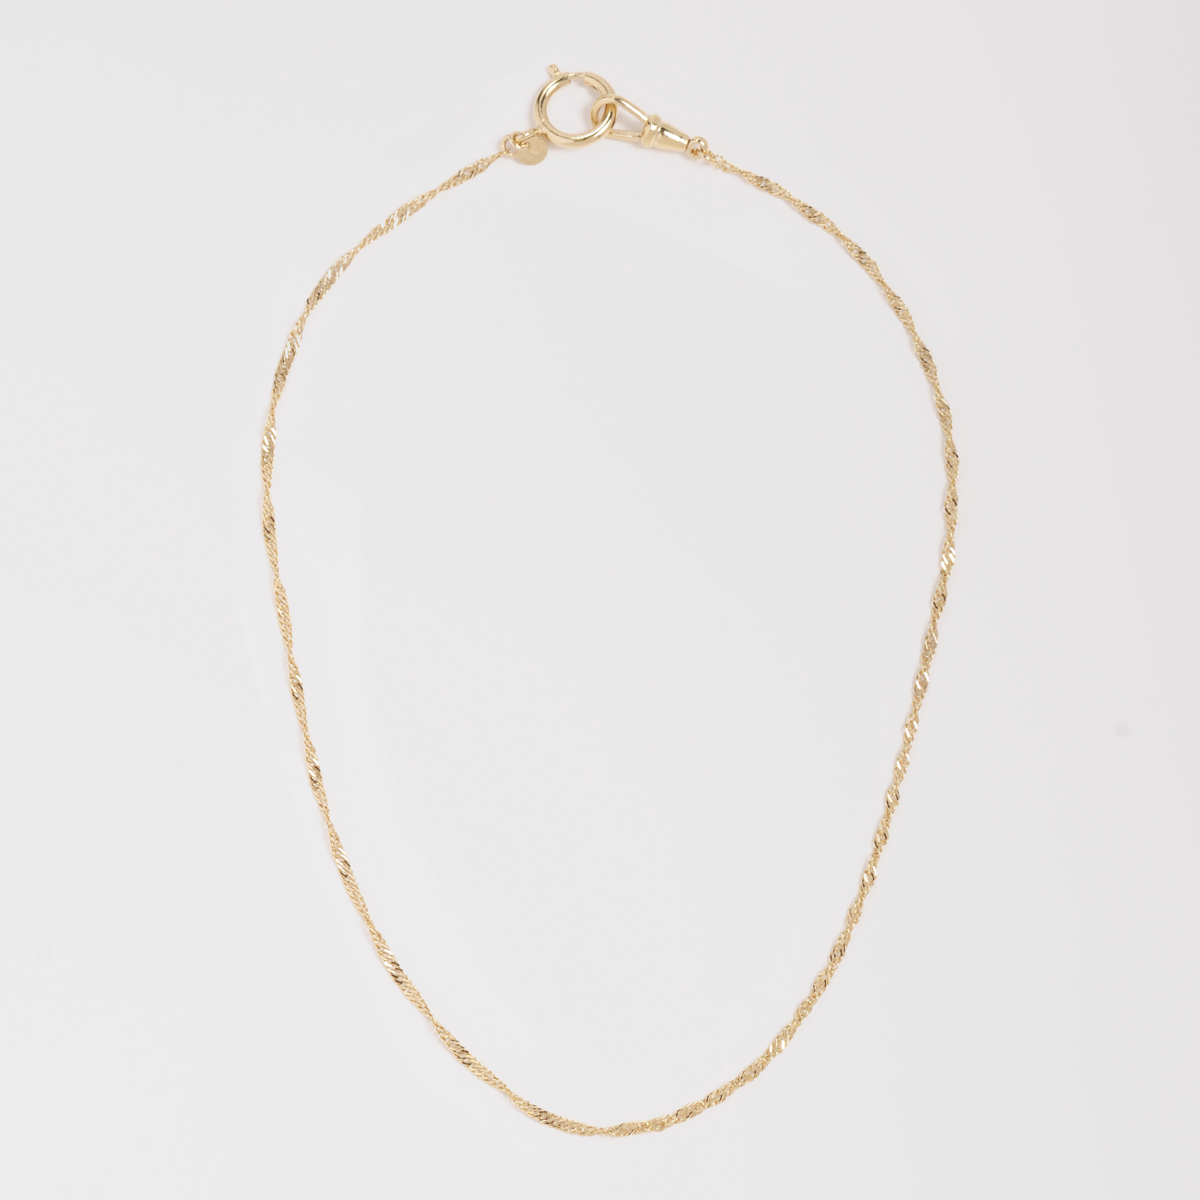 Angela Necklace - Halsketten - 24k vergoldet